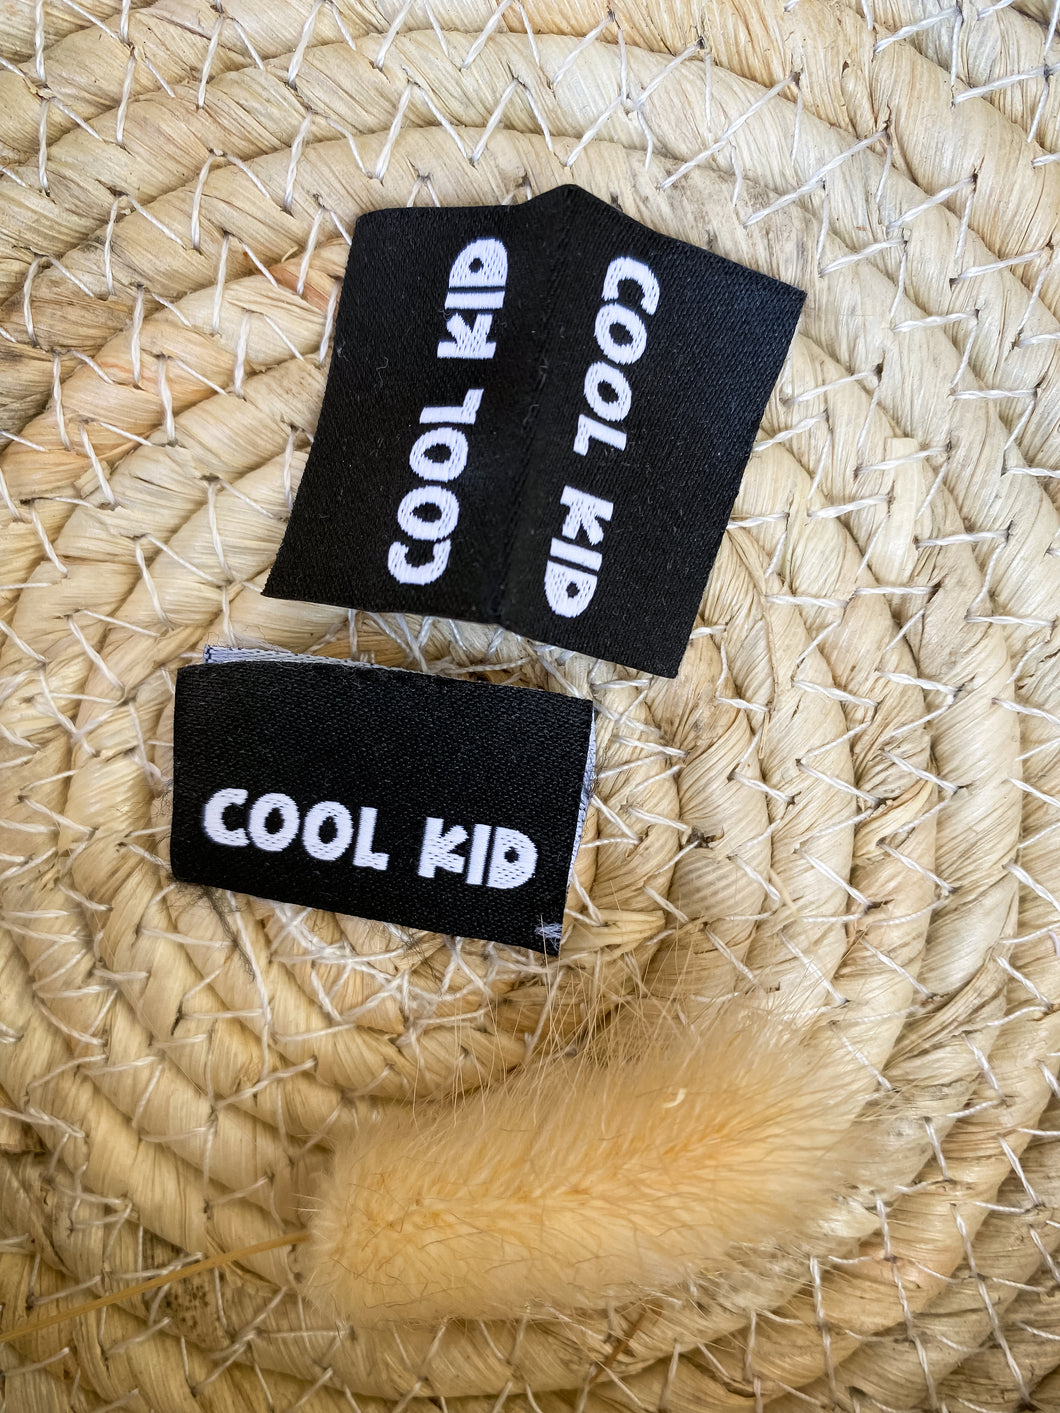 Cool Kid Label